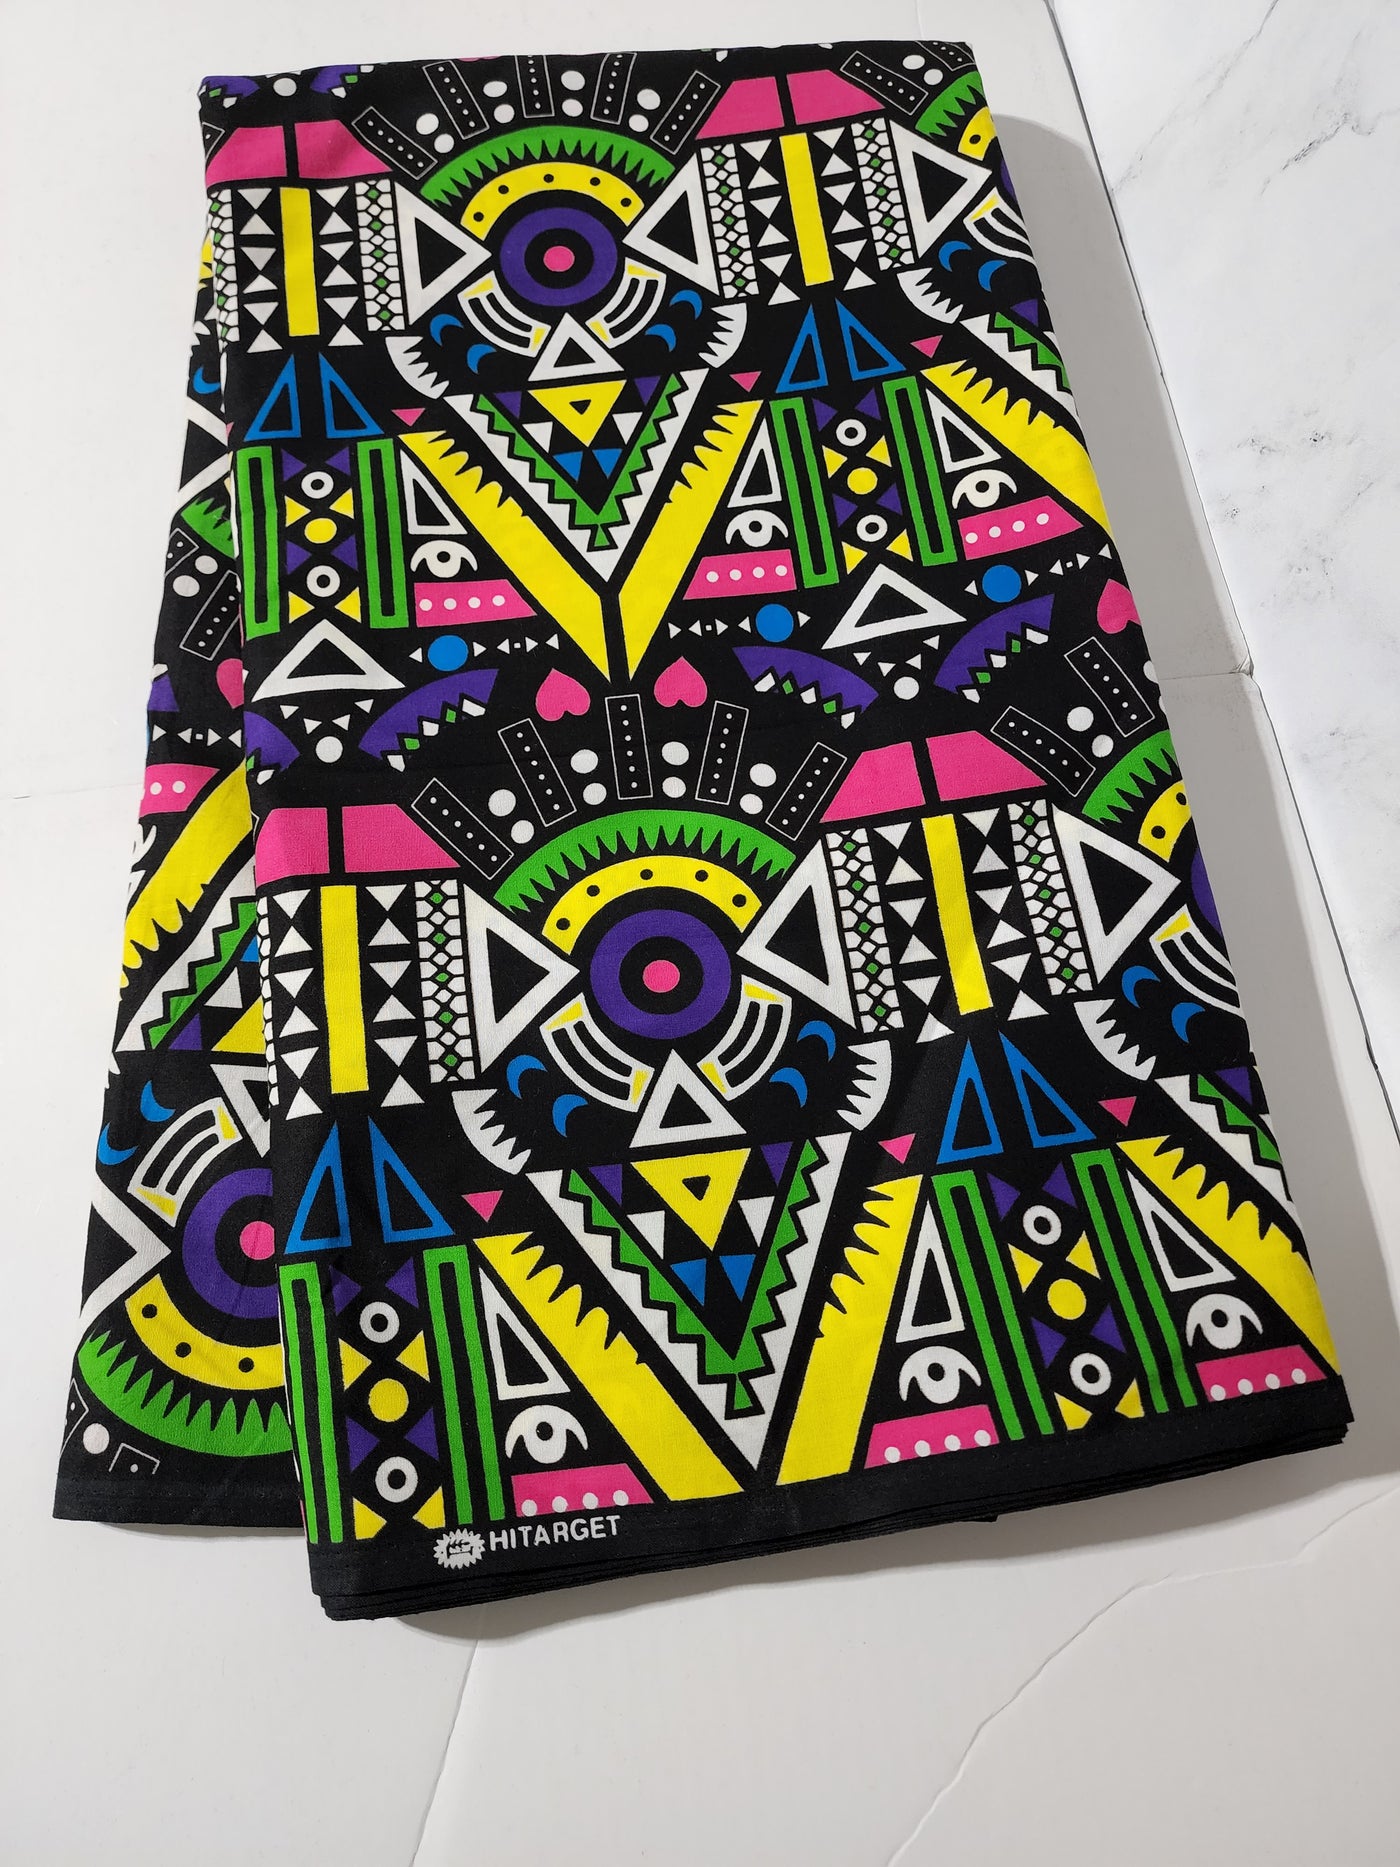 Black and Purple Tribal Ankara Fabric, ACS0322